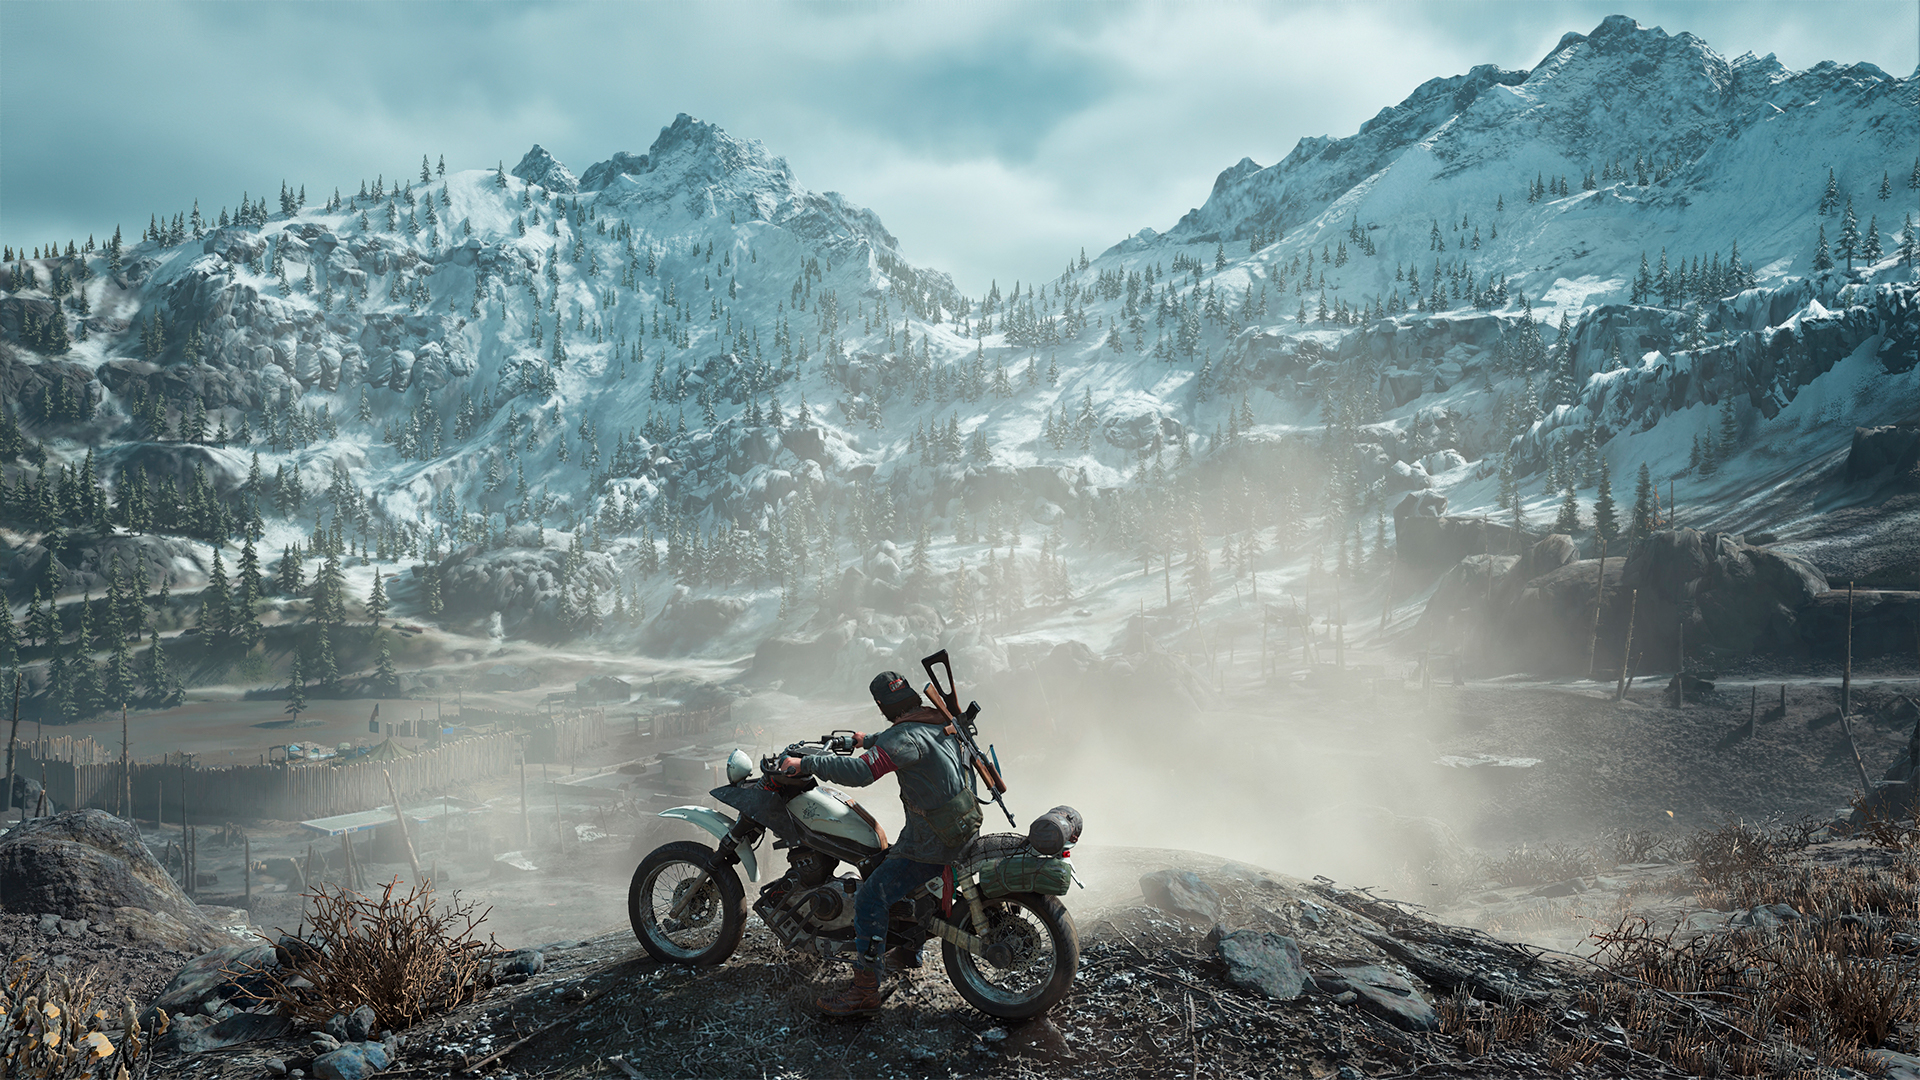 General 1920x1080 Days Gone video games video game art motorcycle gun mountains snow nature mist video game men